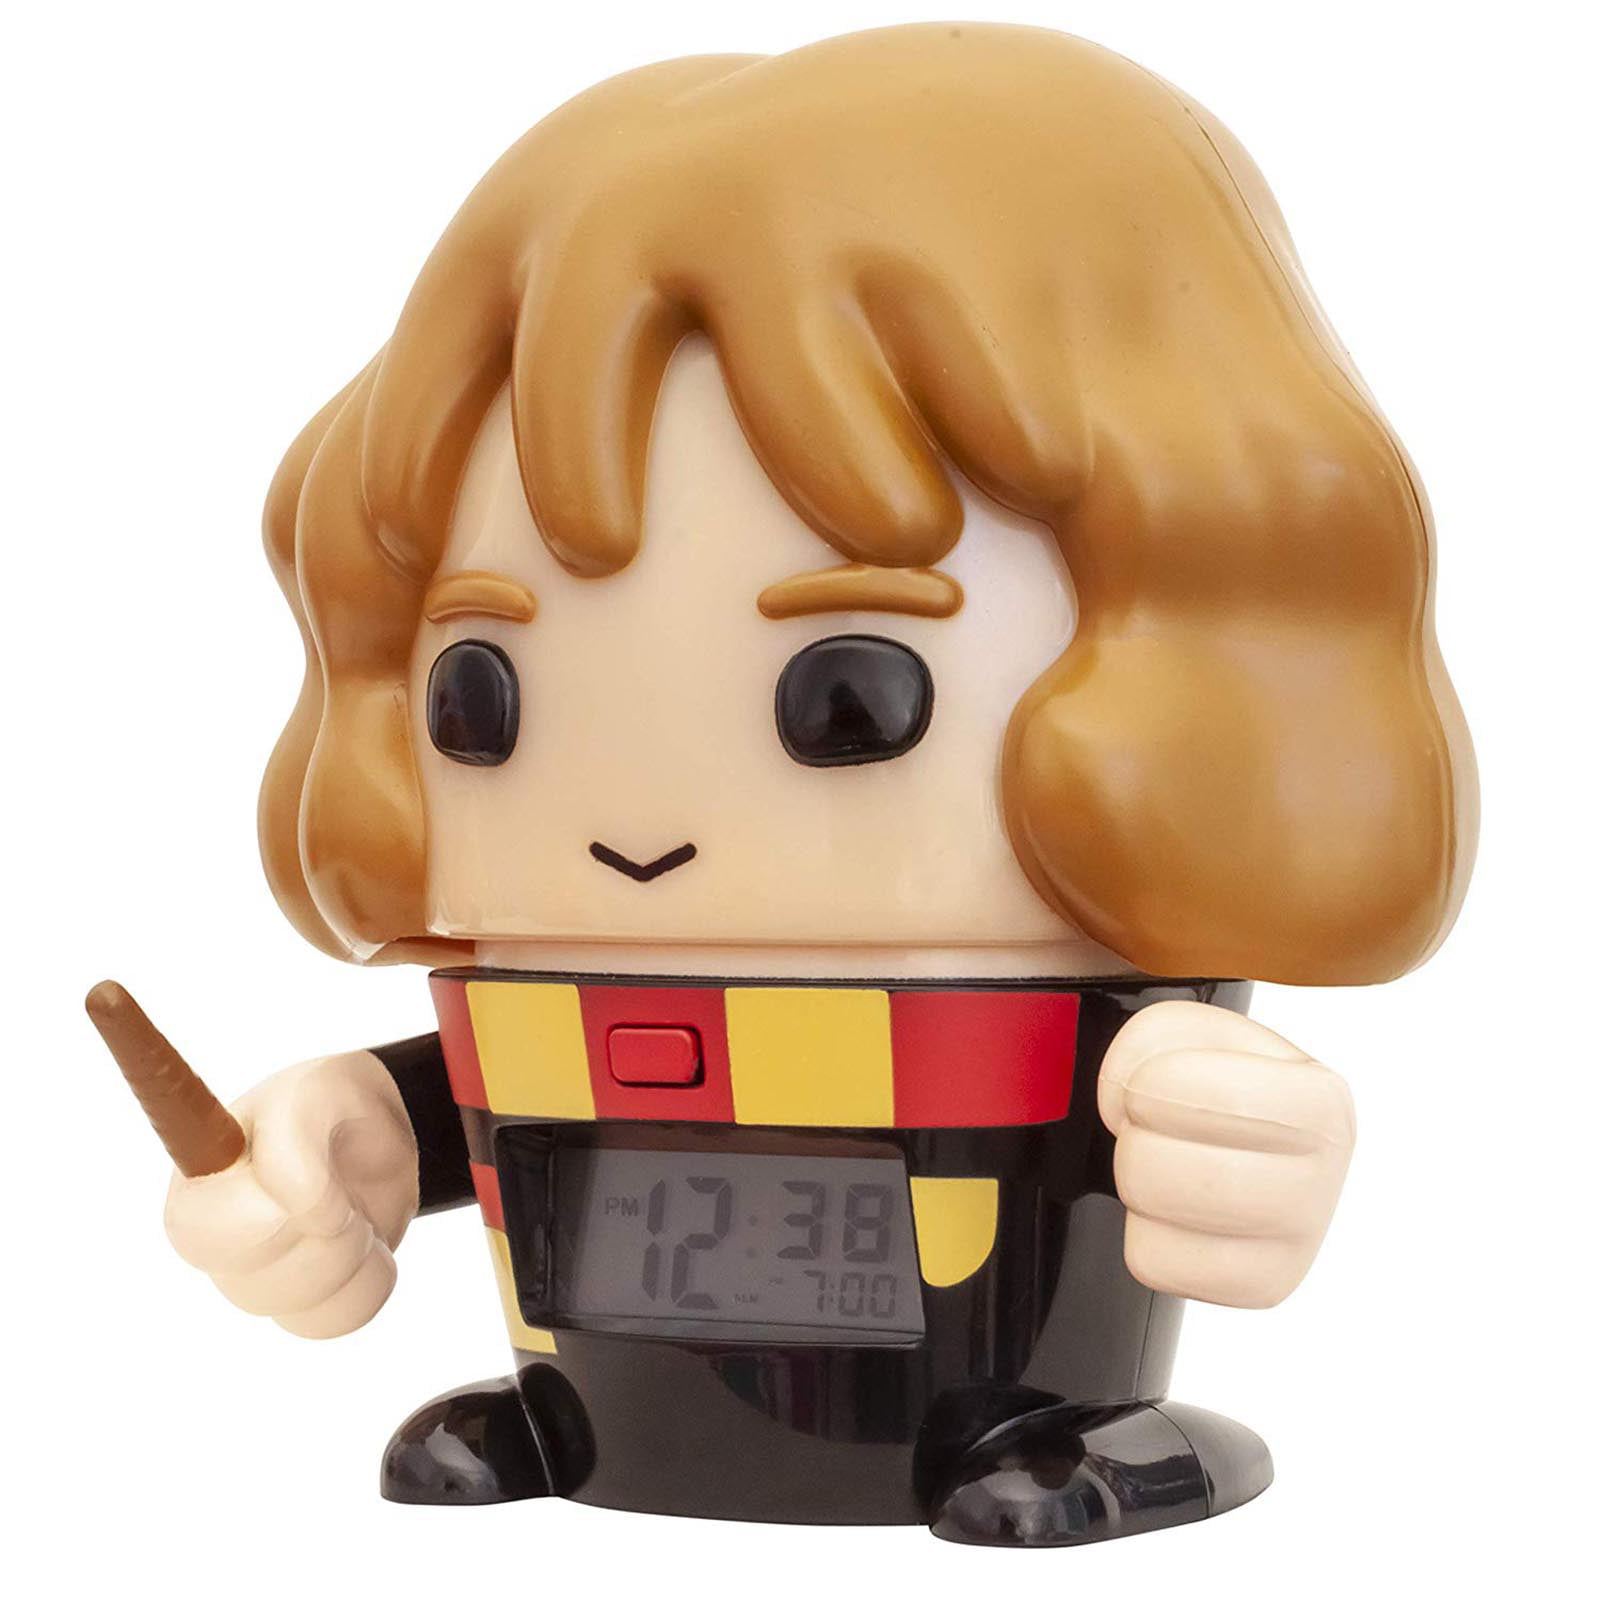 Lego Bulbbotz Harry Potter Kids Night Light Alarm Clock 2021791